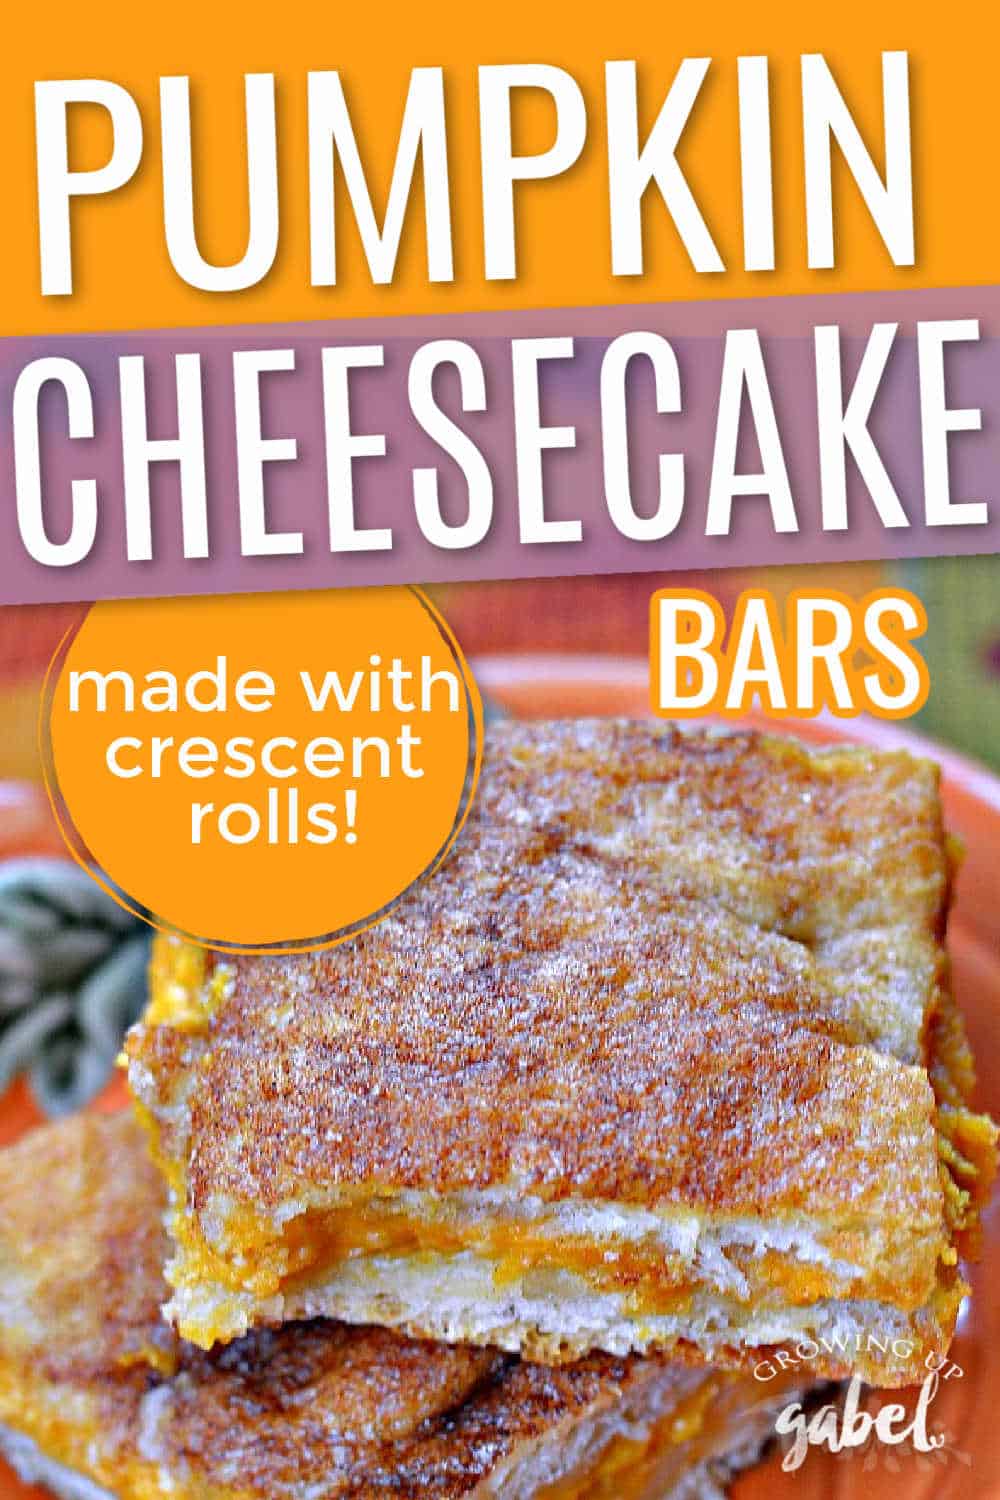 Pumpkin cheesecake bars